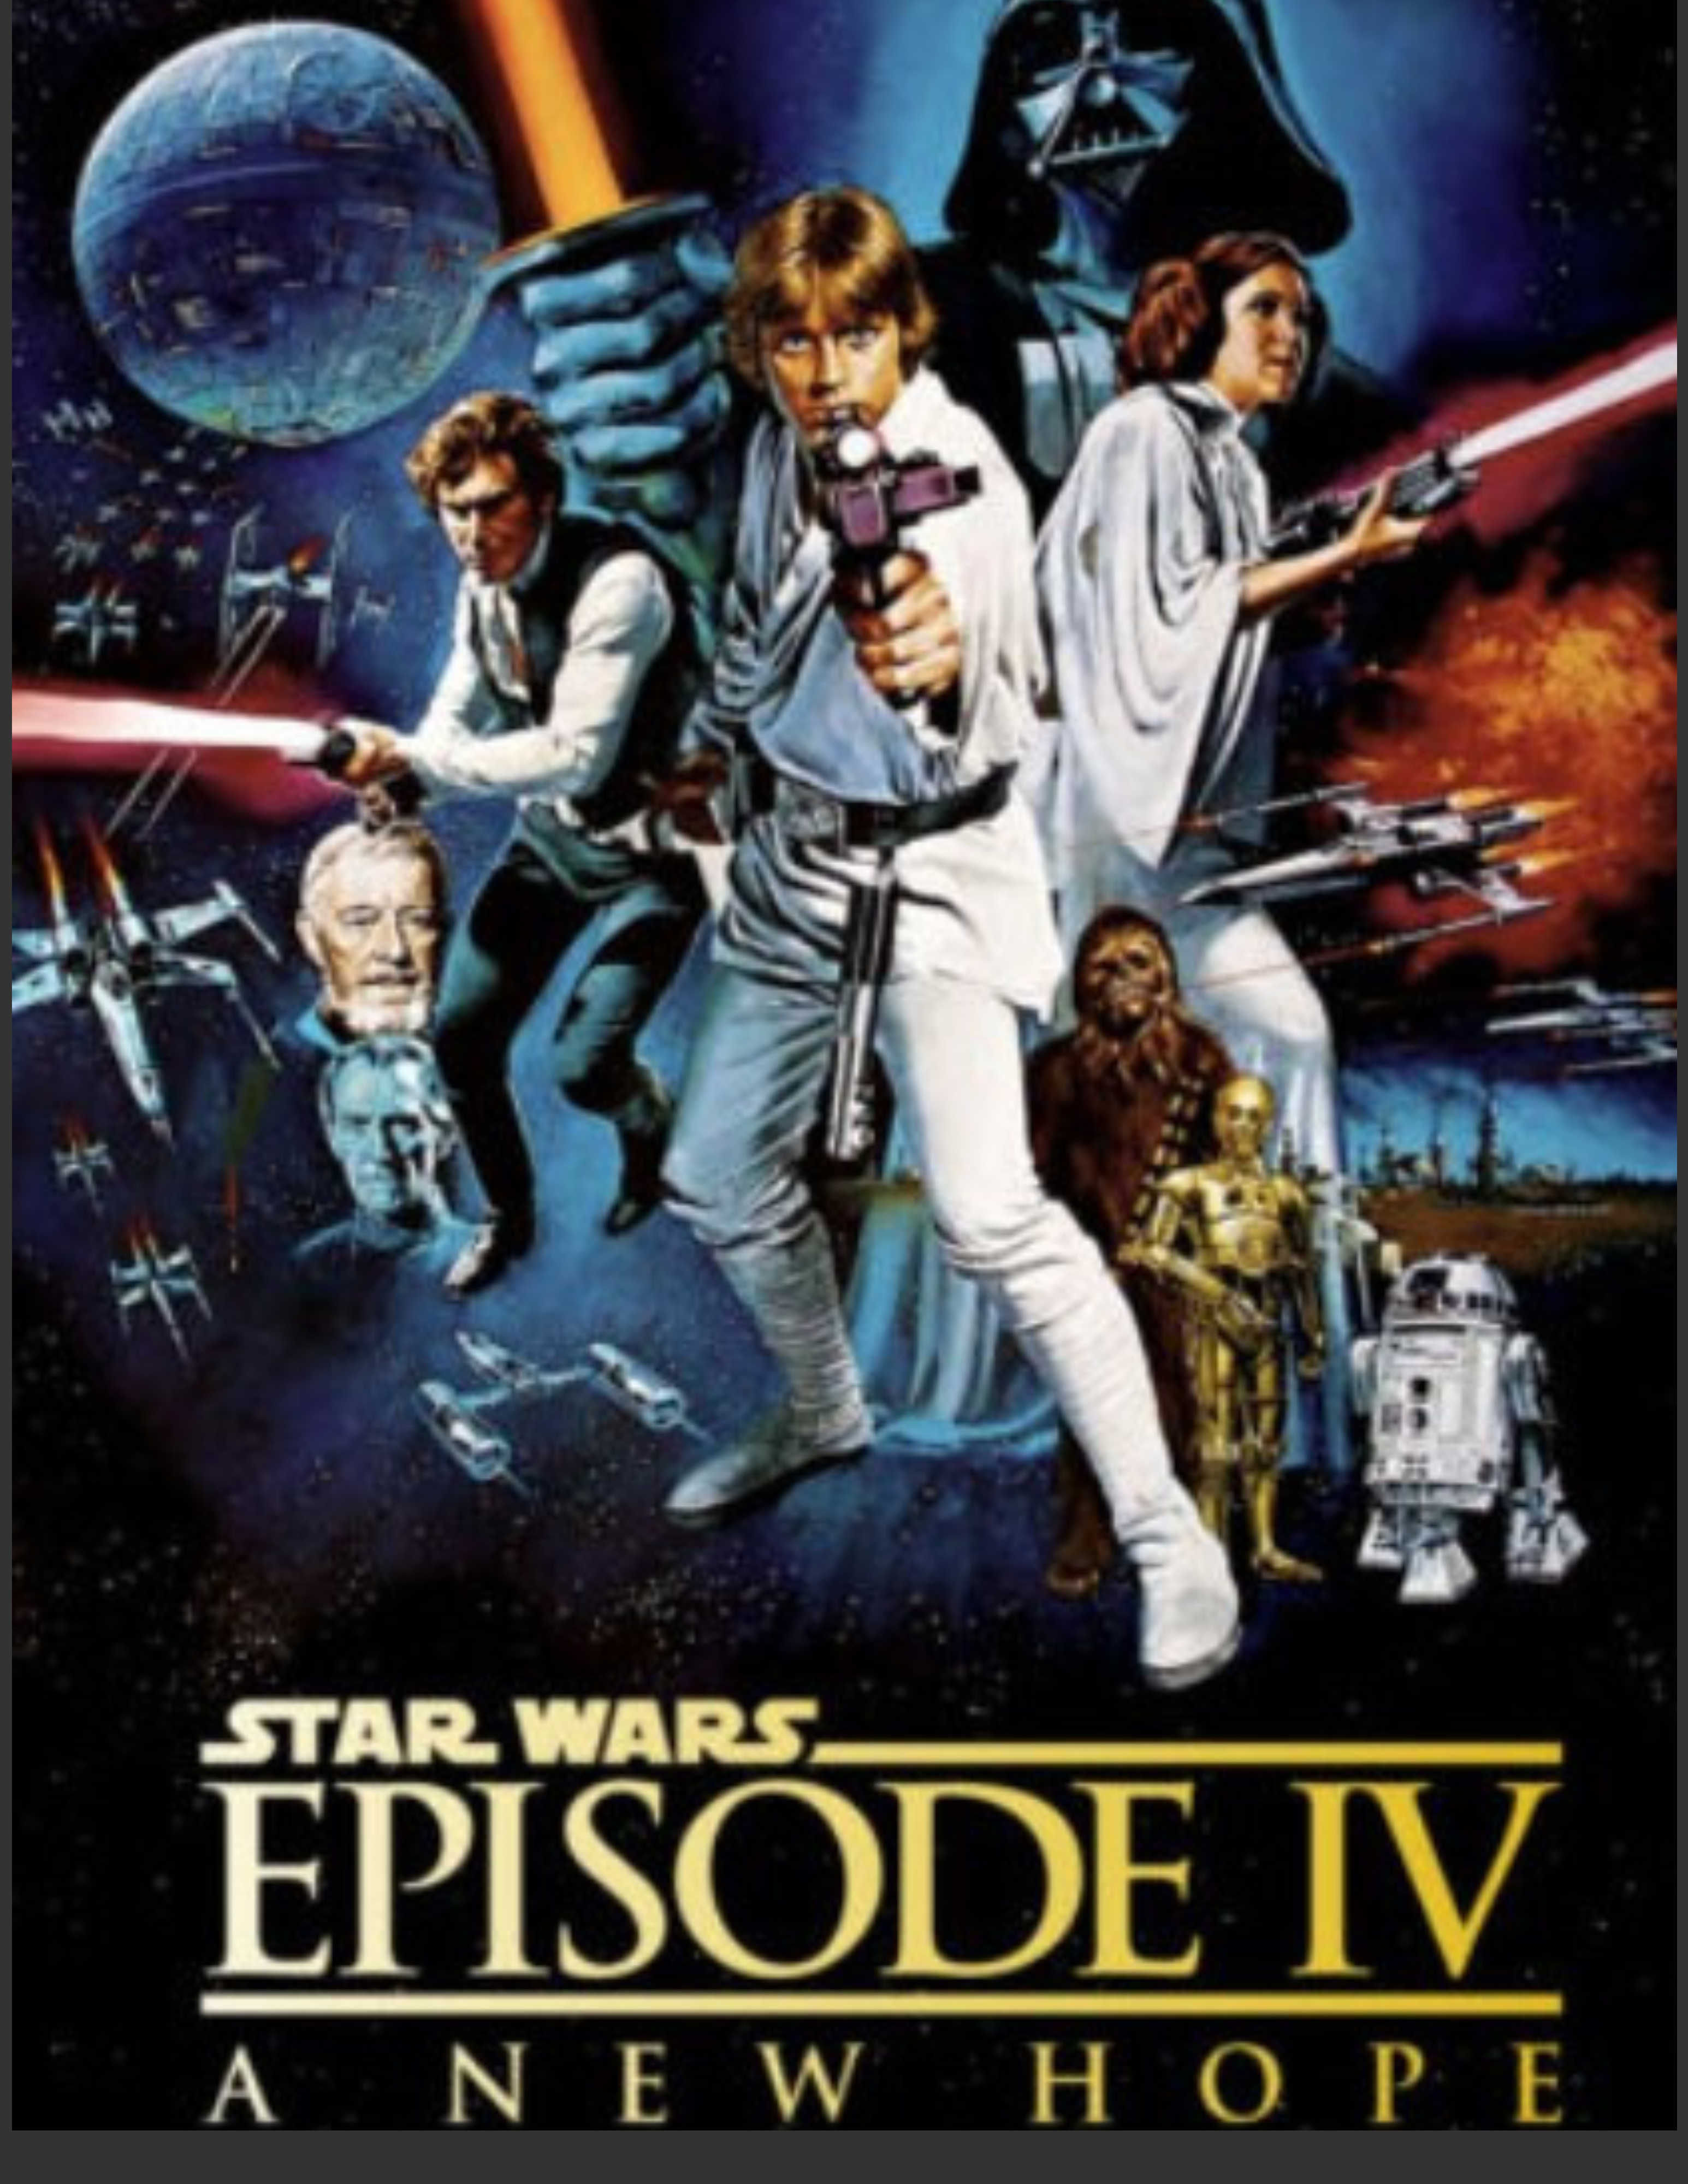 Star Wars Episode IV A New Hope Darth Vader Luke Skywaker Princess Leia